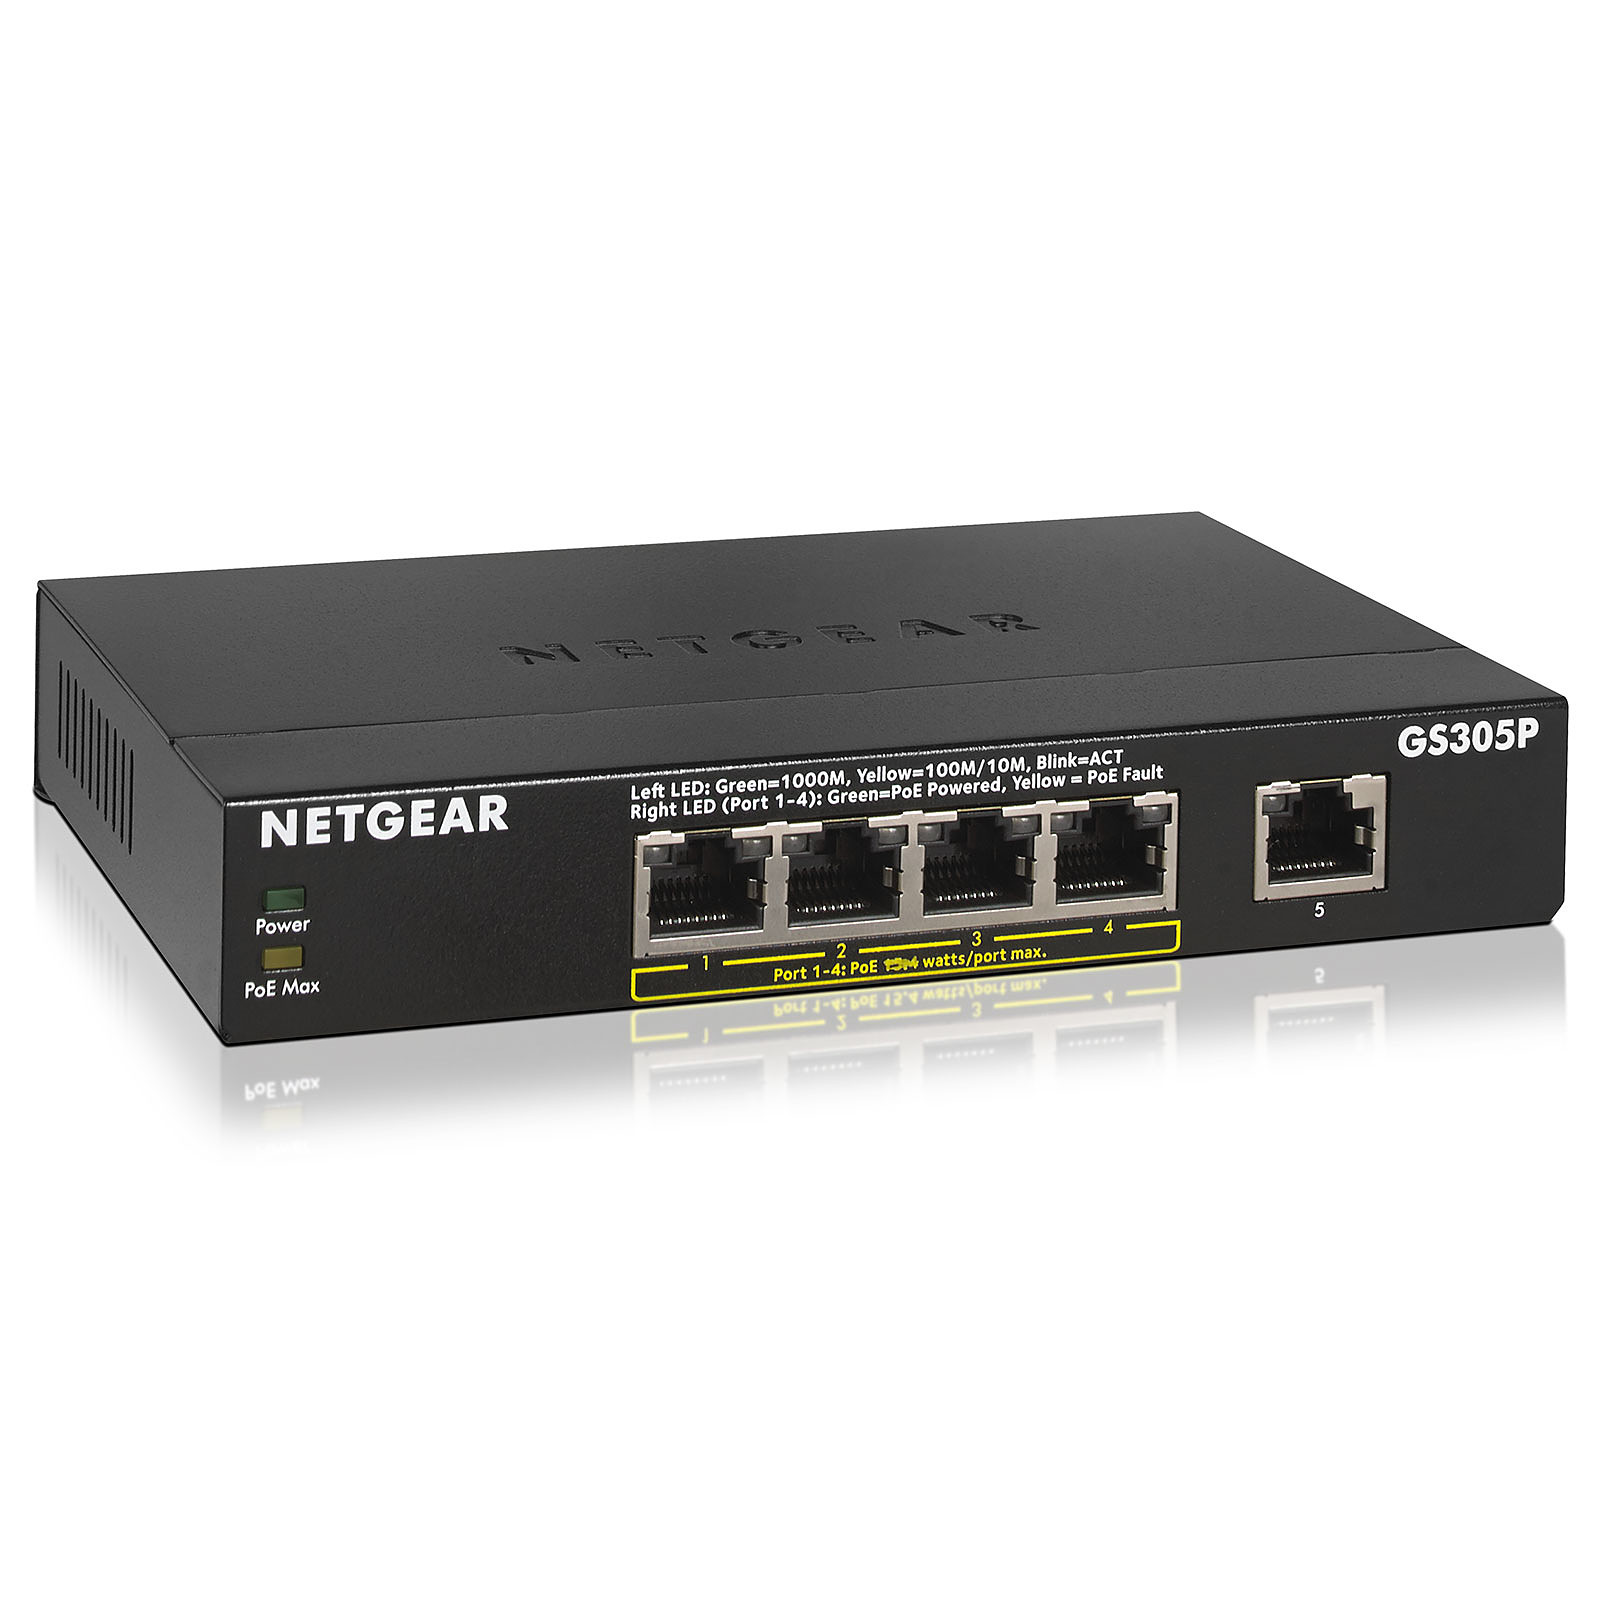 Netgear GS305Pv2 - Switch Netgear